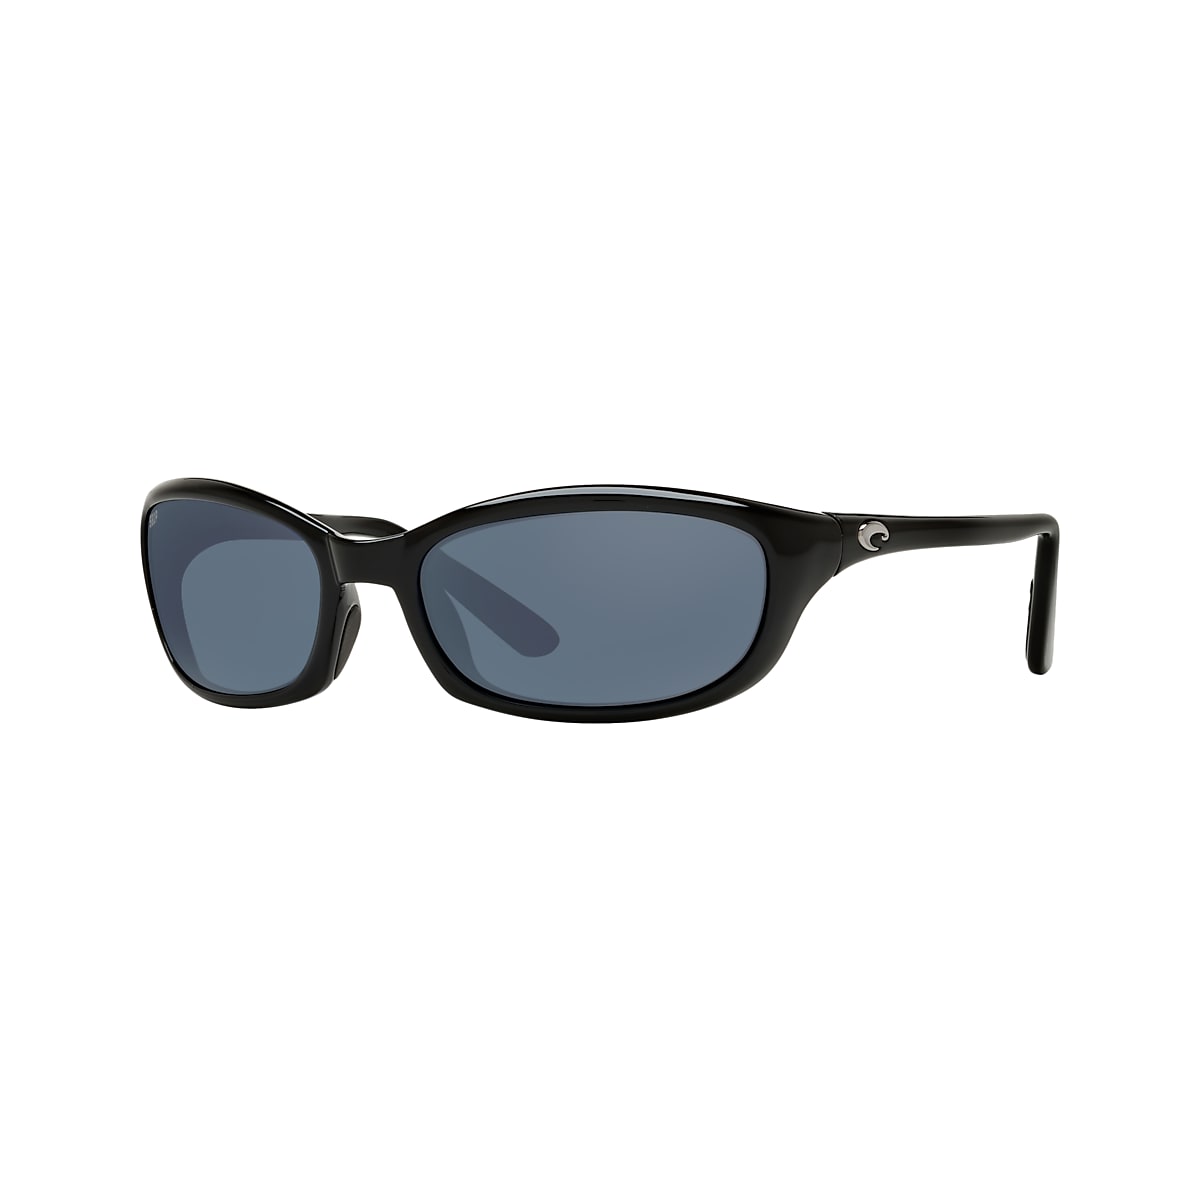 Harpoon Polarized Sunglasses in Gray